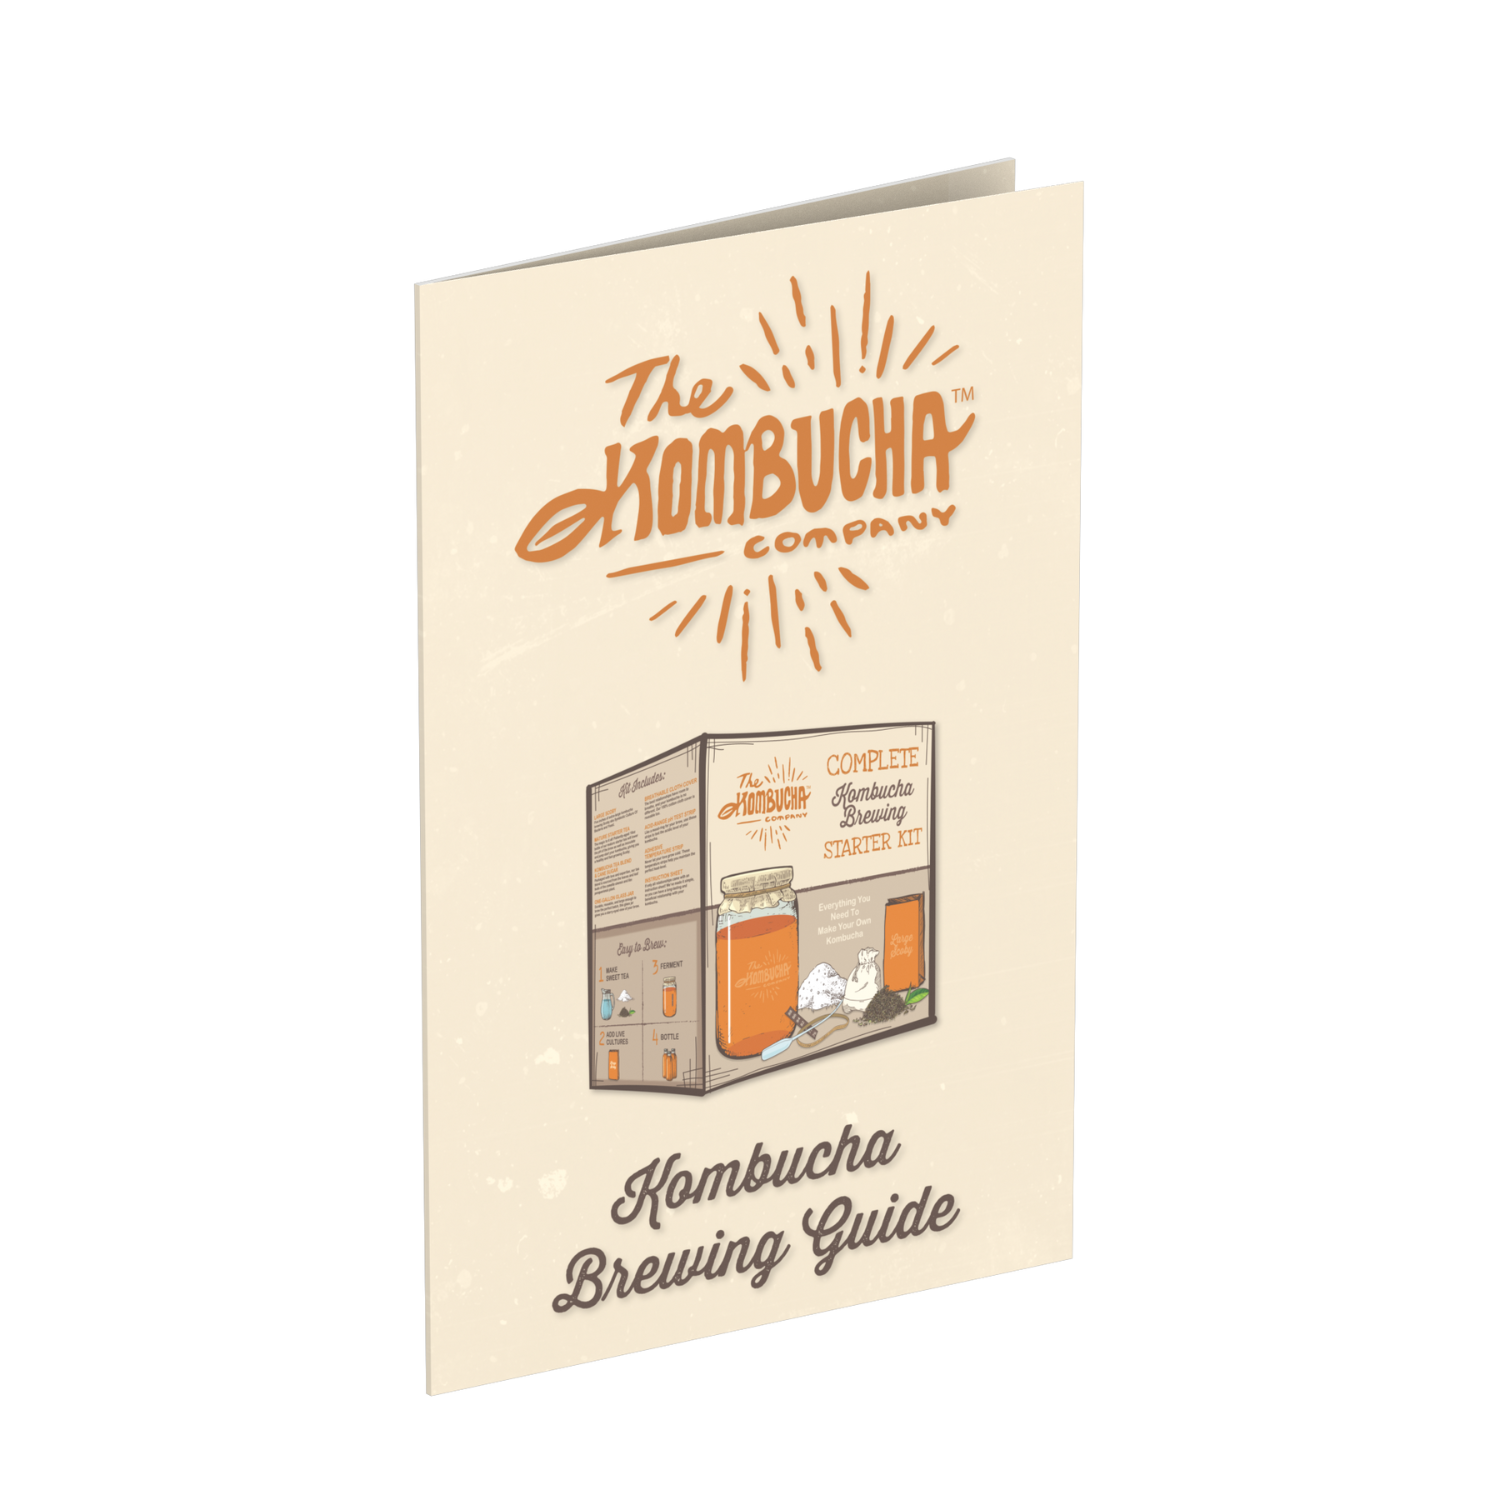 COMPLETE Homebrew Kombucha Kit - The Good Brew Company